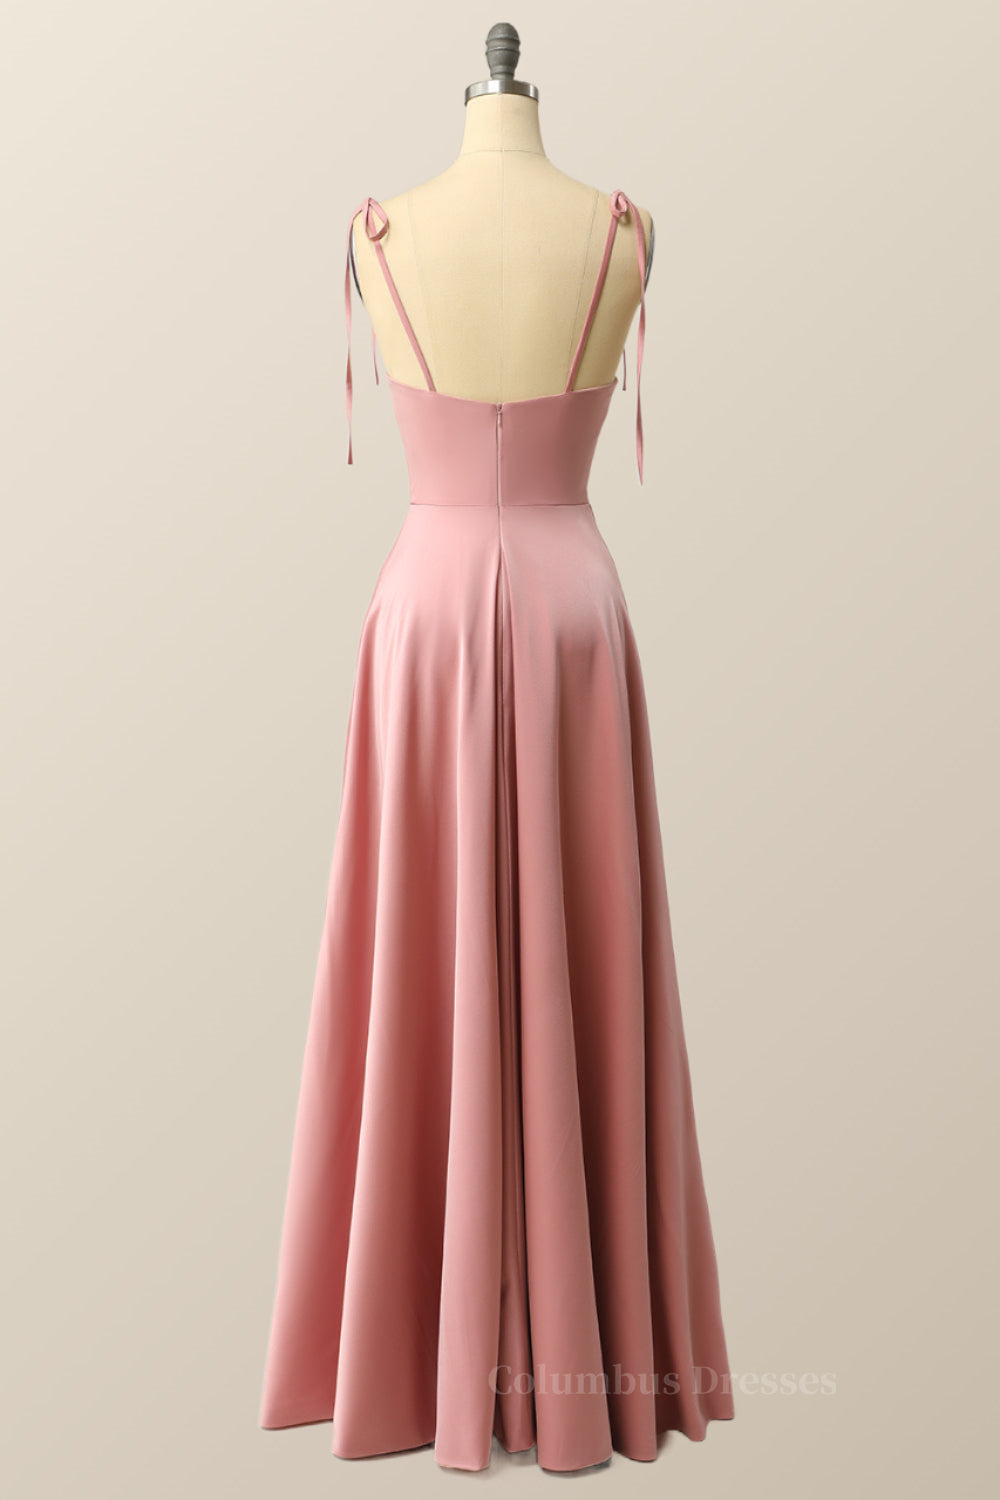 Prom Dress For Sale, Blush Pink A-line Full Length Long Prom Dress